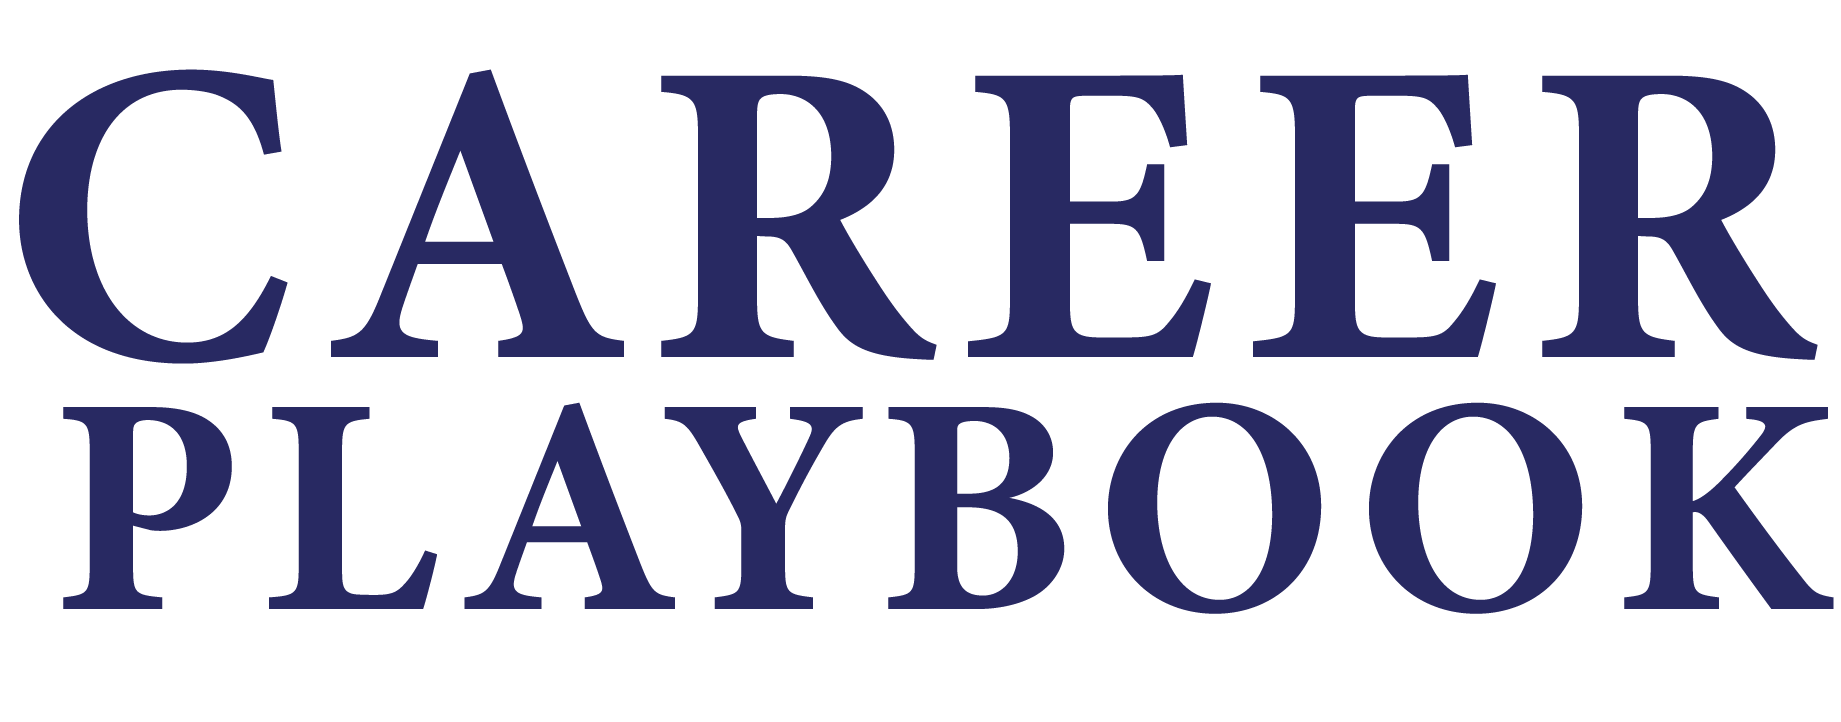 Career Yearbook Logo